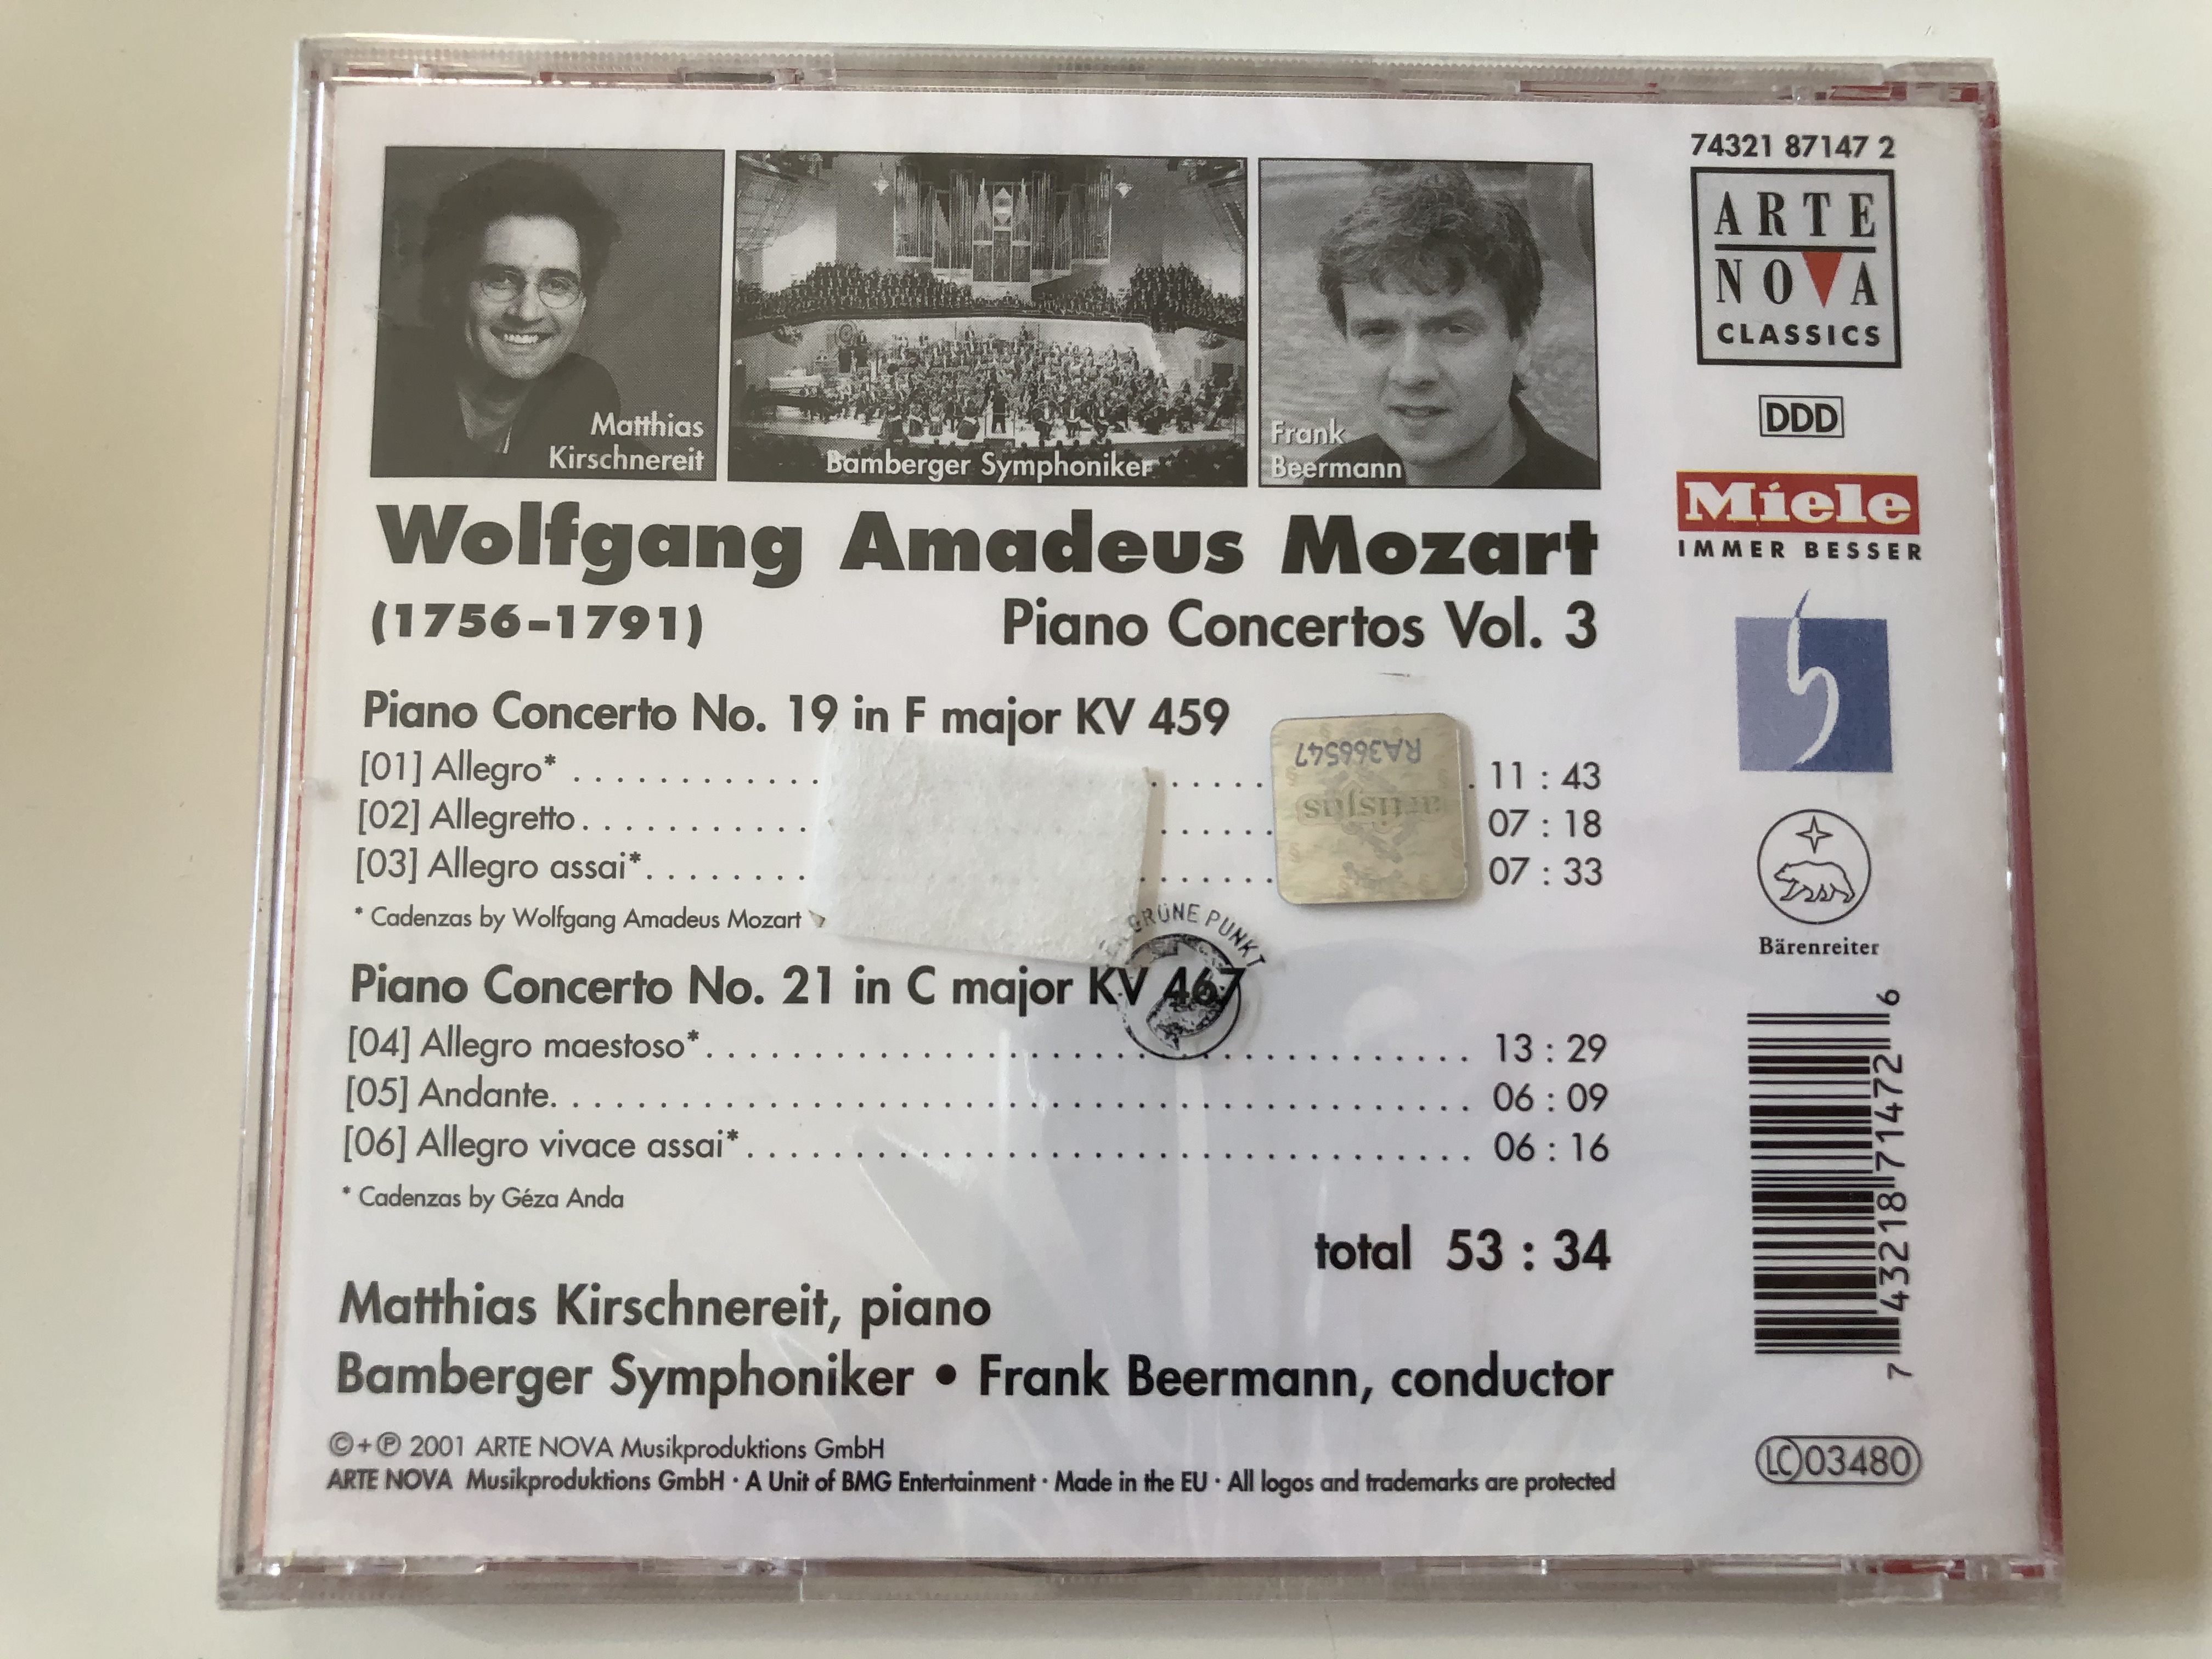 mozart-die-klavierkonzerte-the-piano-concertos-vol.-3-matthias-kirschnereit-bamberger-symphoniker-frank-beermann-arte-nova-classics-audio-cd-2001-74321-87147-2-2-.jpg